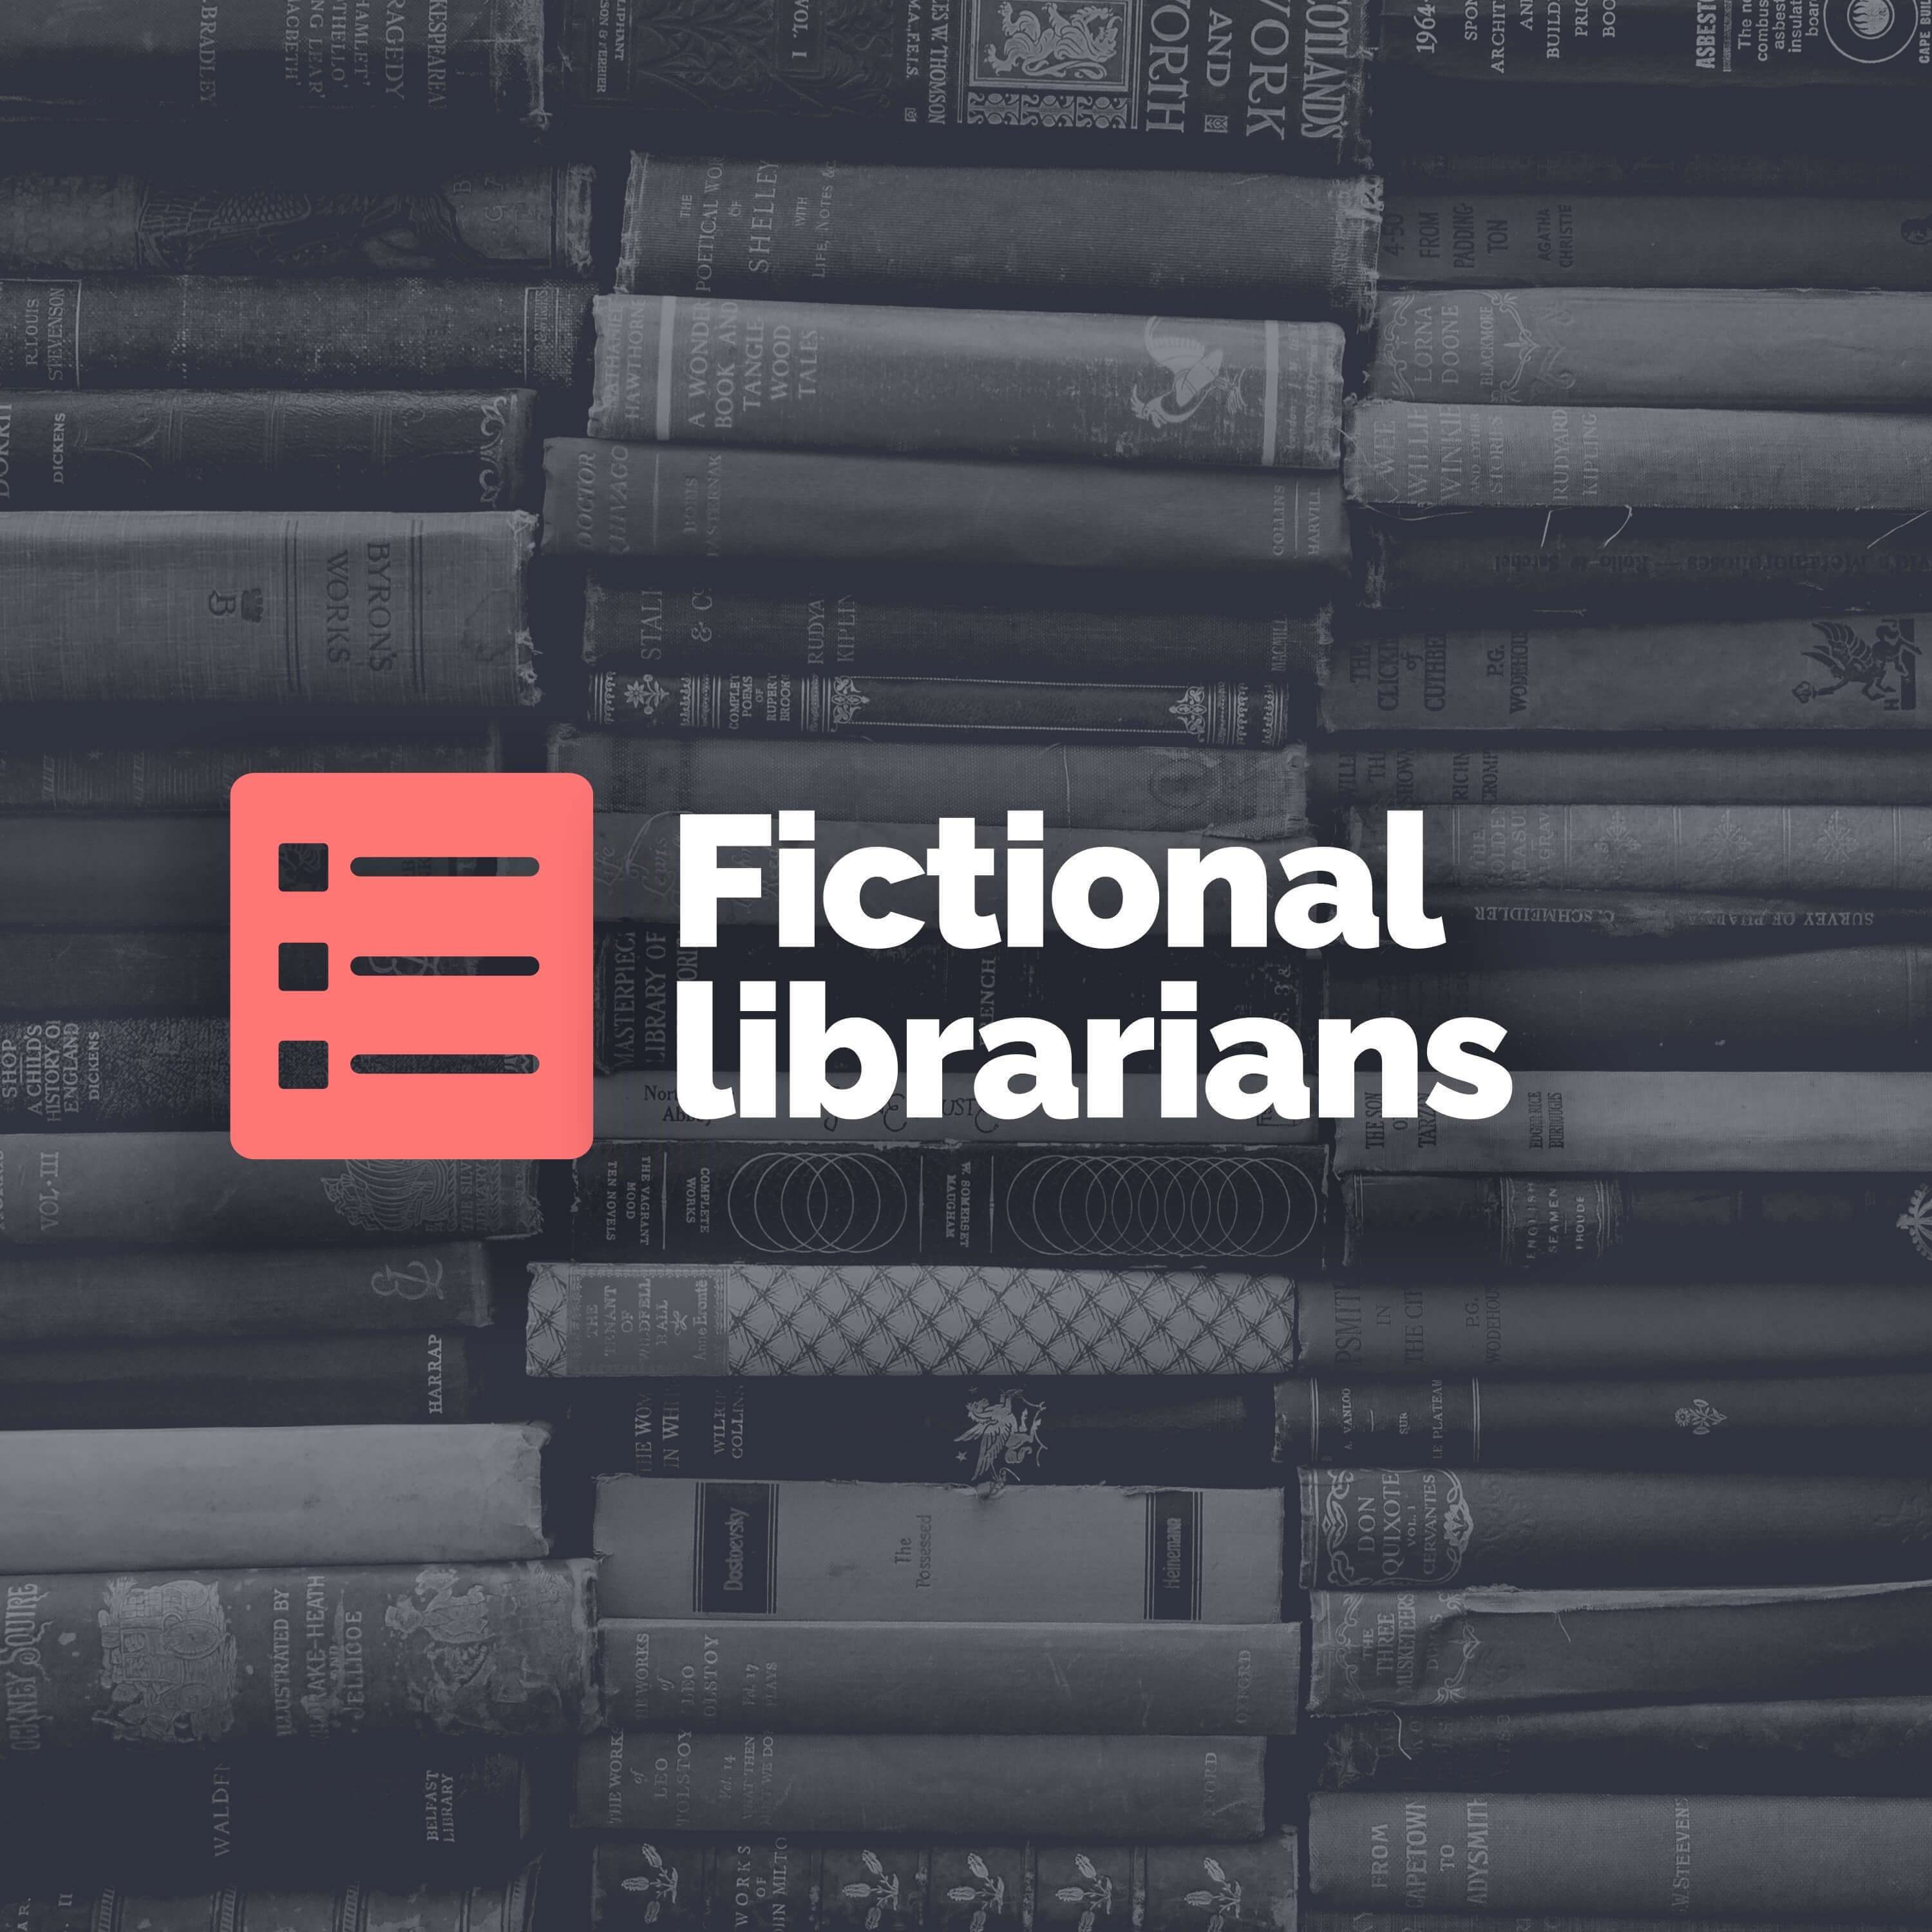 Top 5 fictional librarians